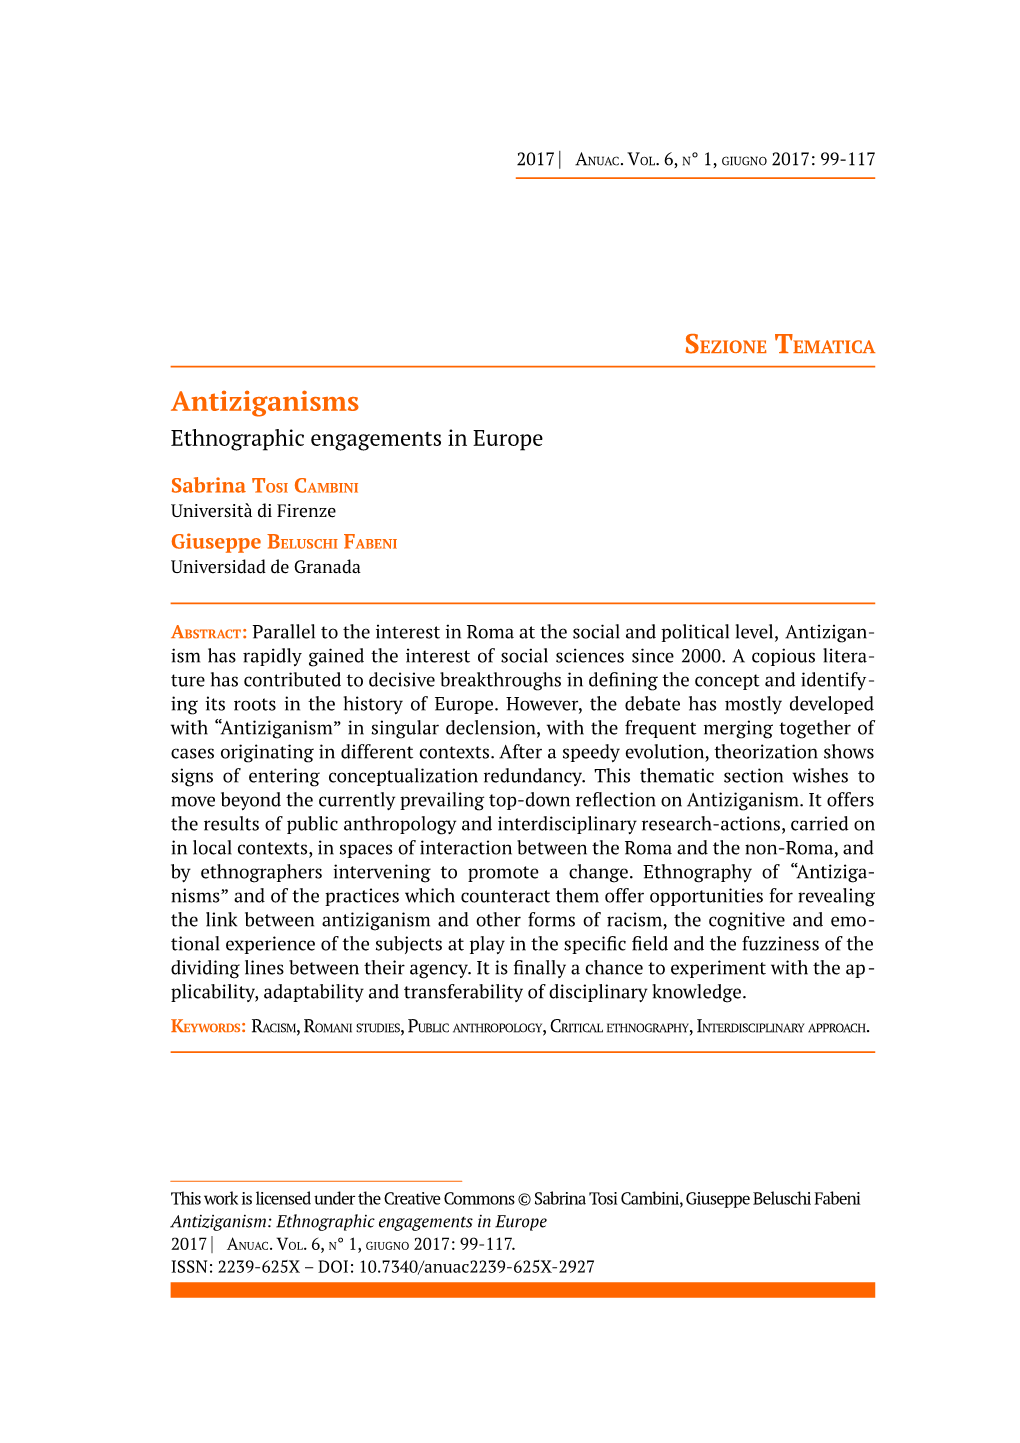 Antiziganisms Ethnographic Engagements in Europe